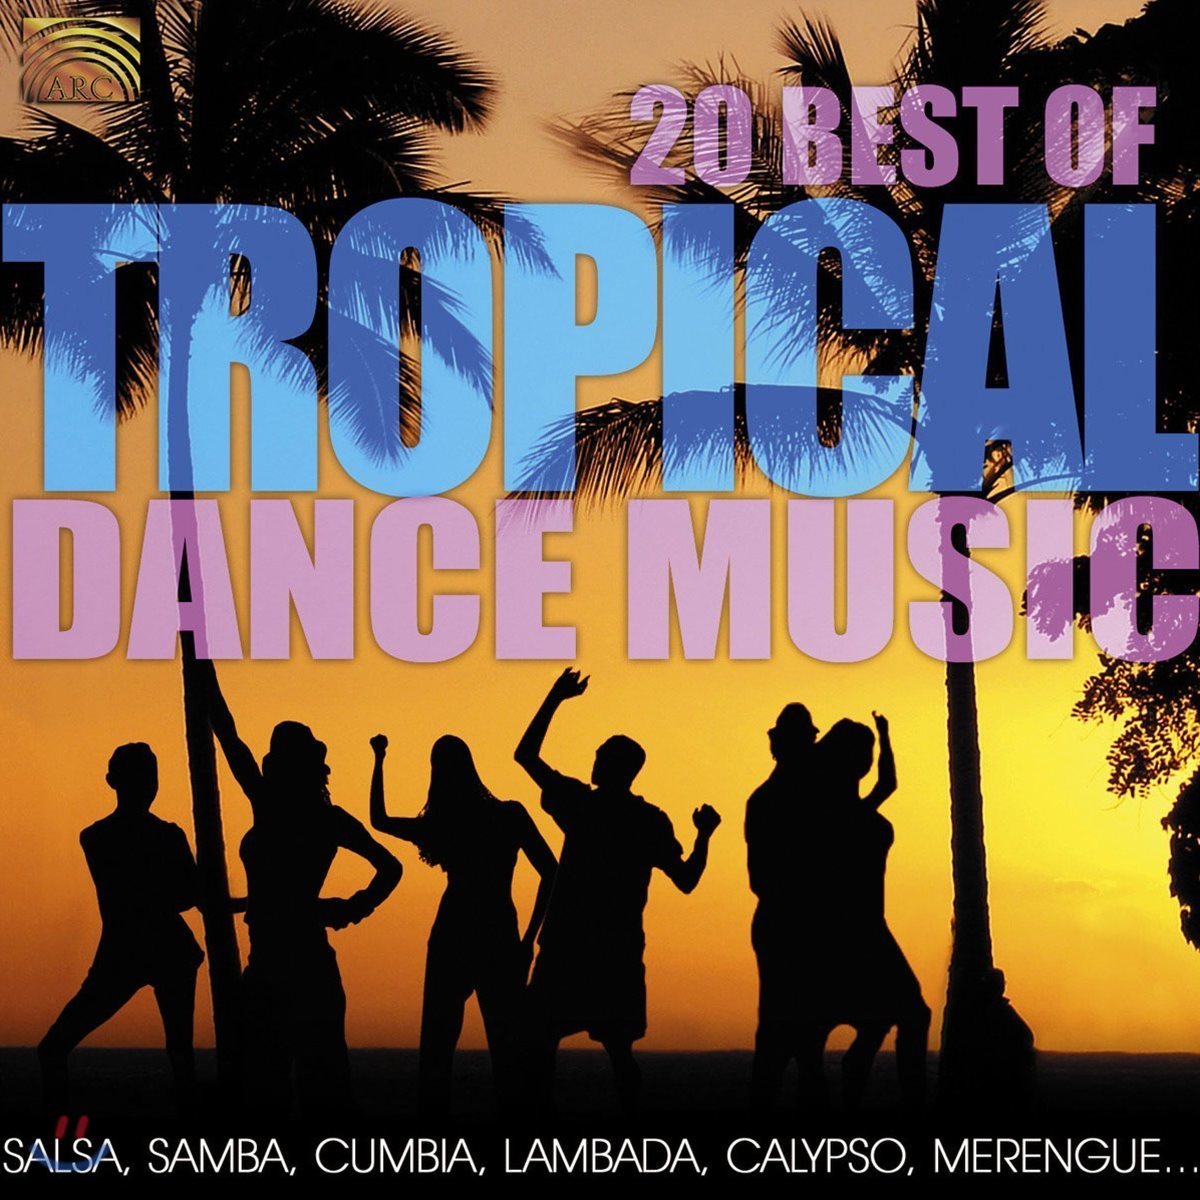 20 Best Of Tropical Dance Music - Salsa, Samba, Cumbia, Lambada etc.